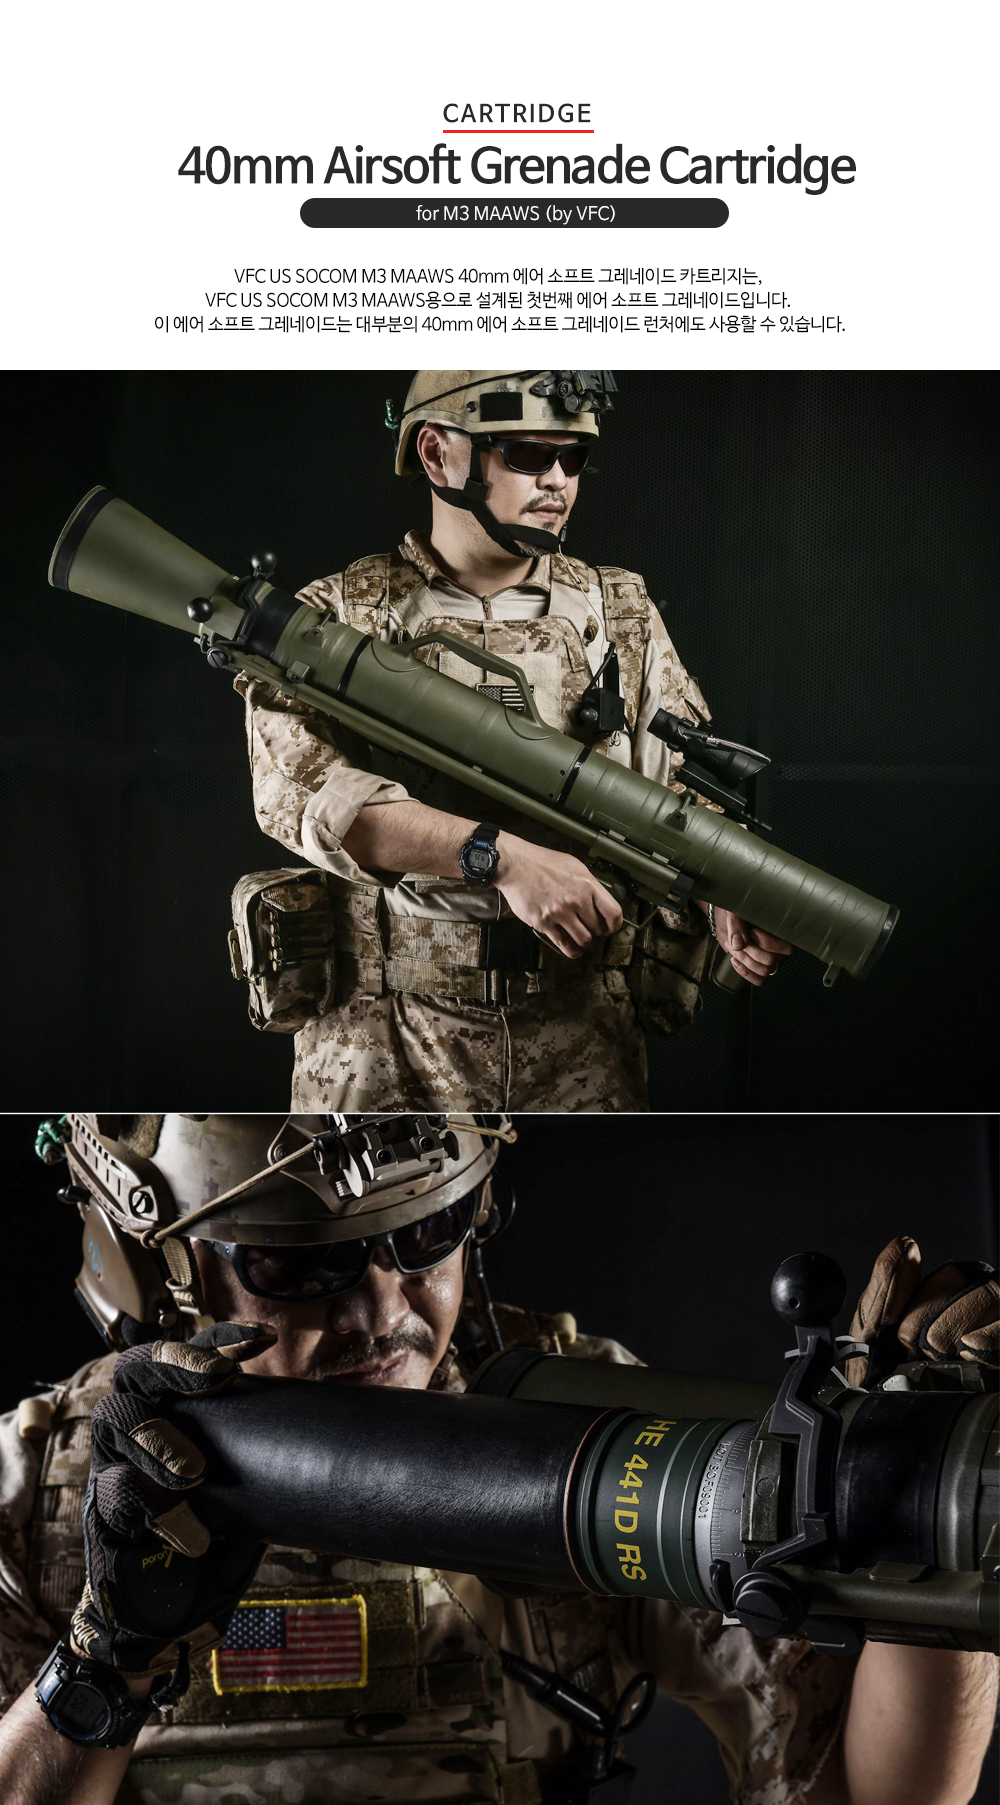 40mm-Airsoft-Grenade-Cartridge_02_162252.jpg